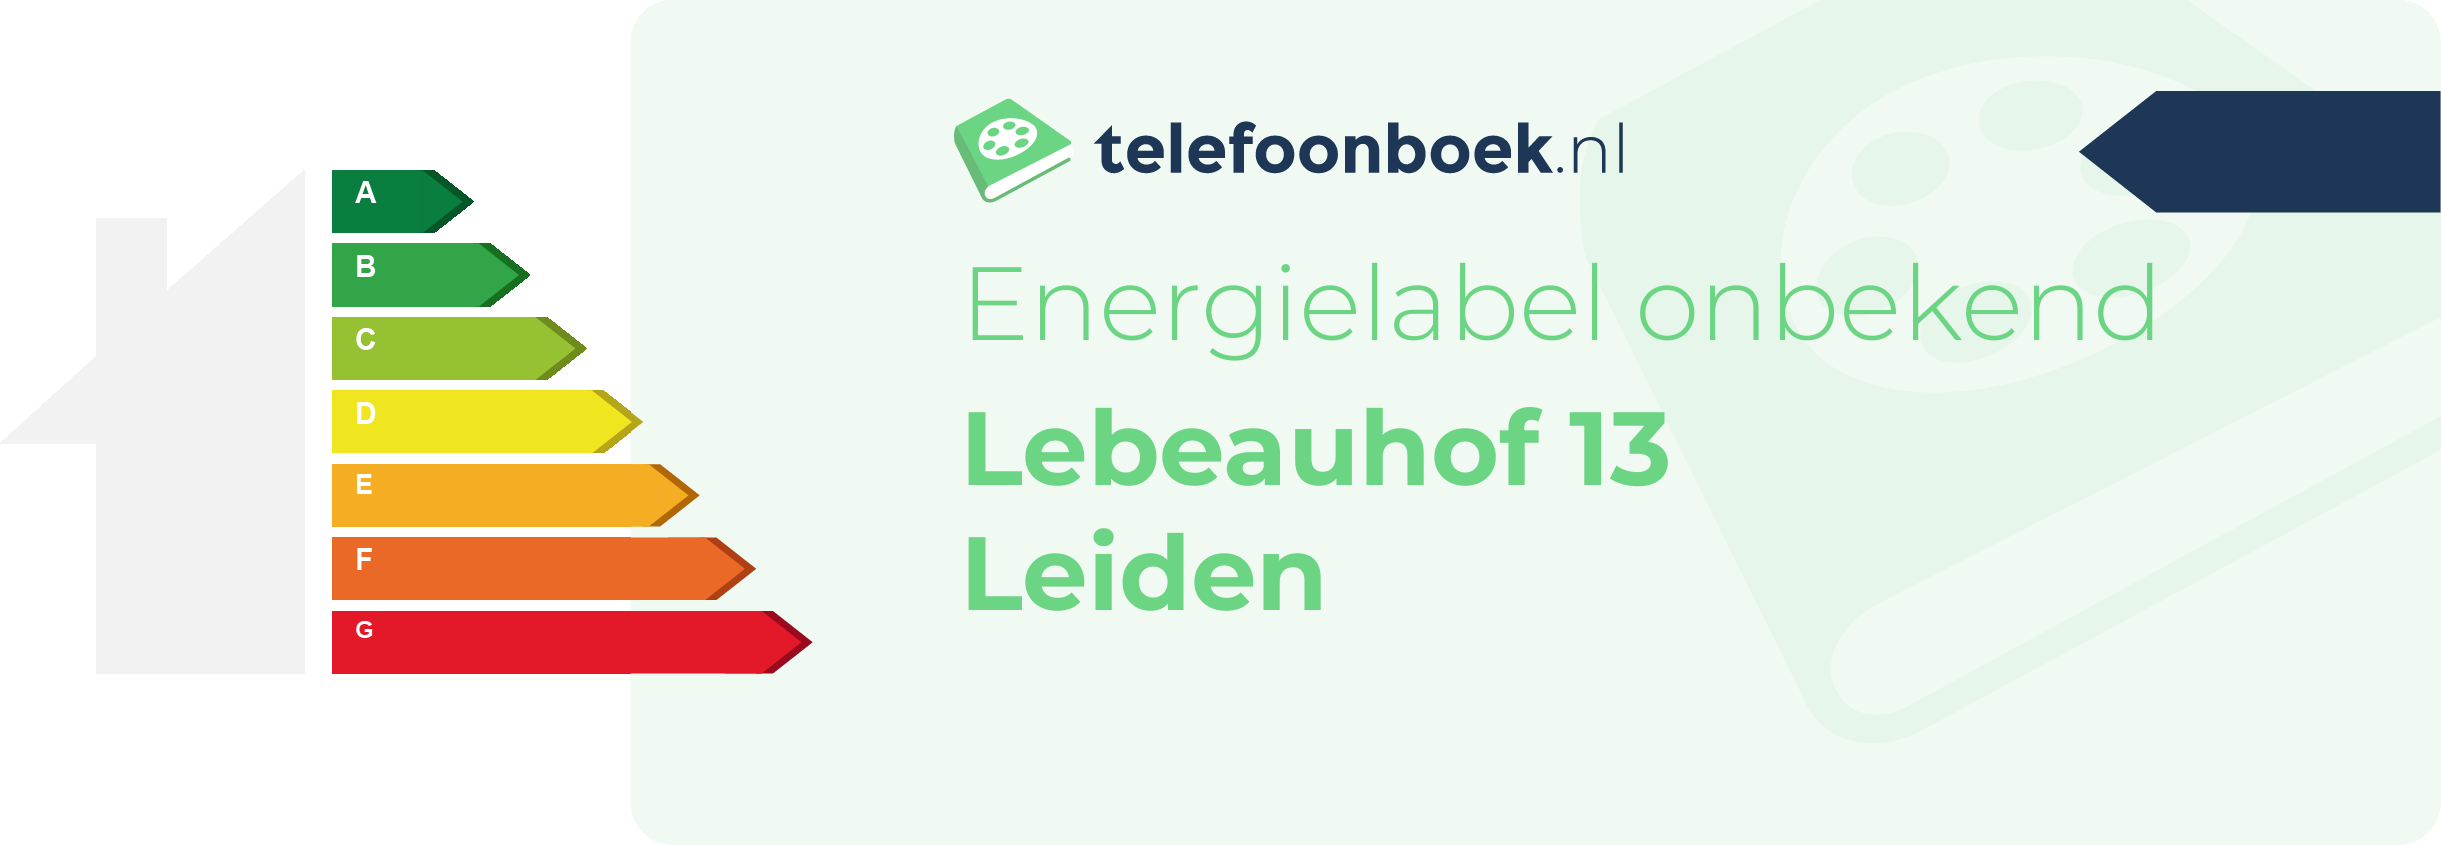 Energielabel Lebeauhof 13 Leiden